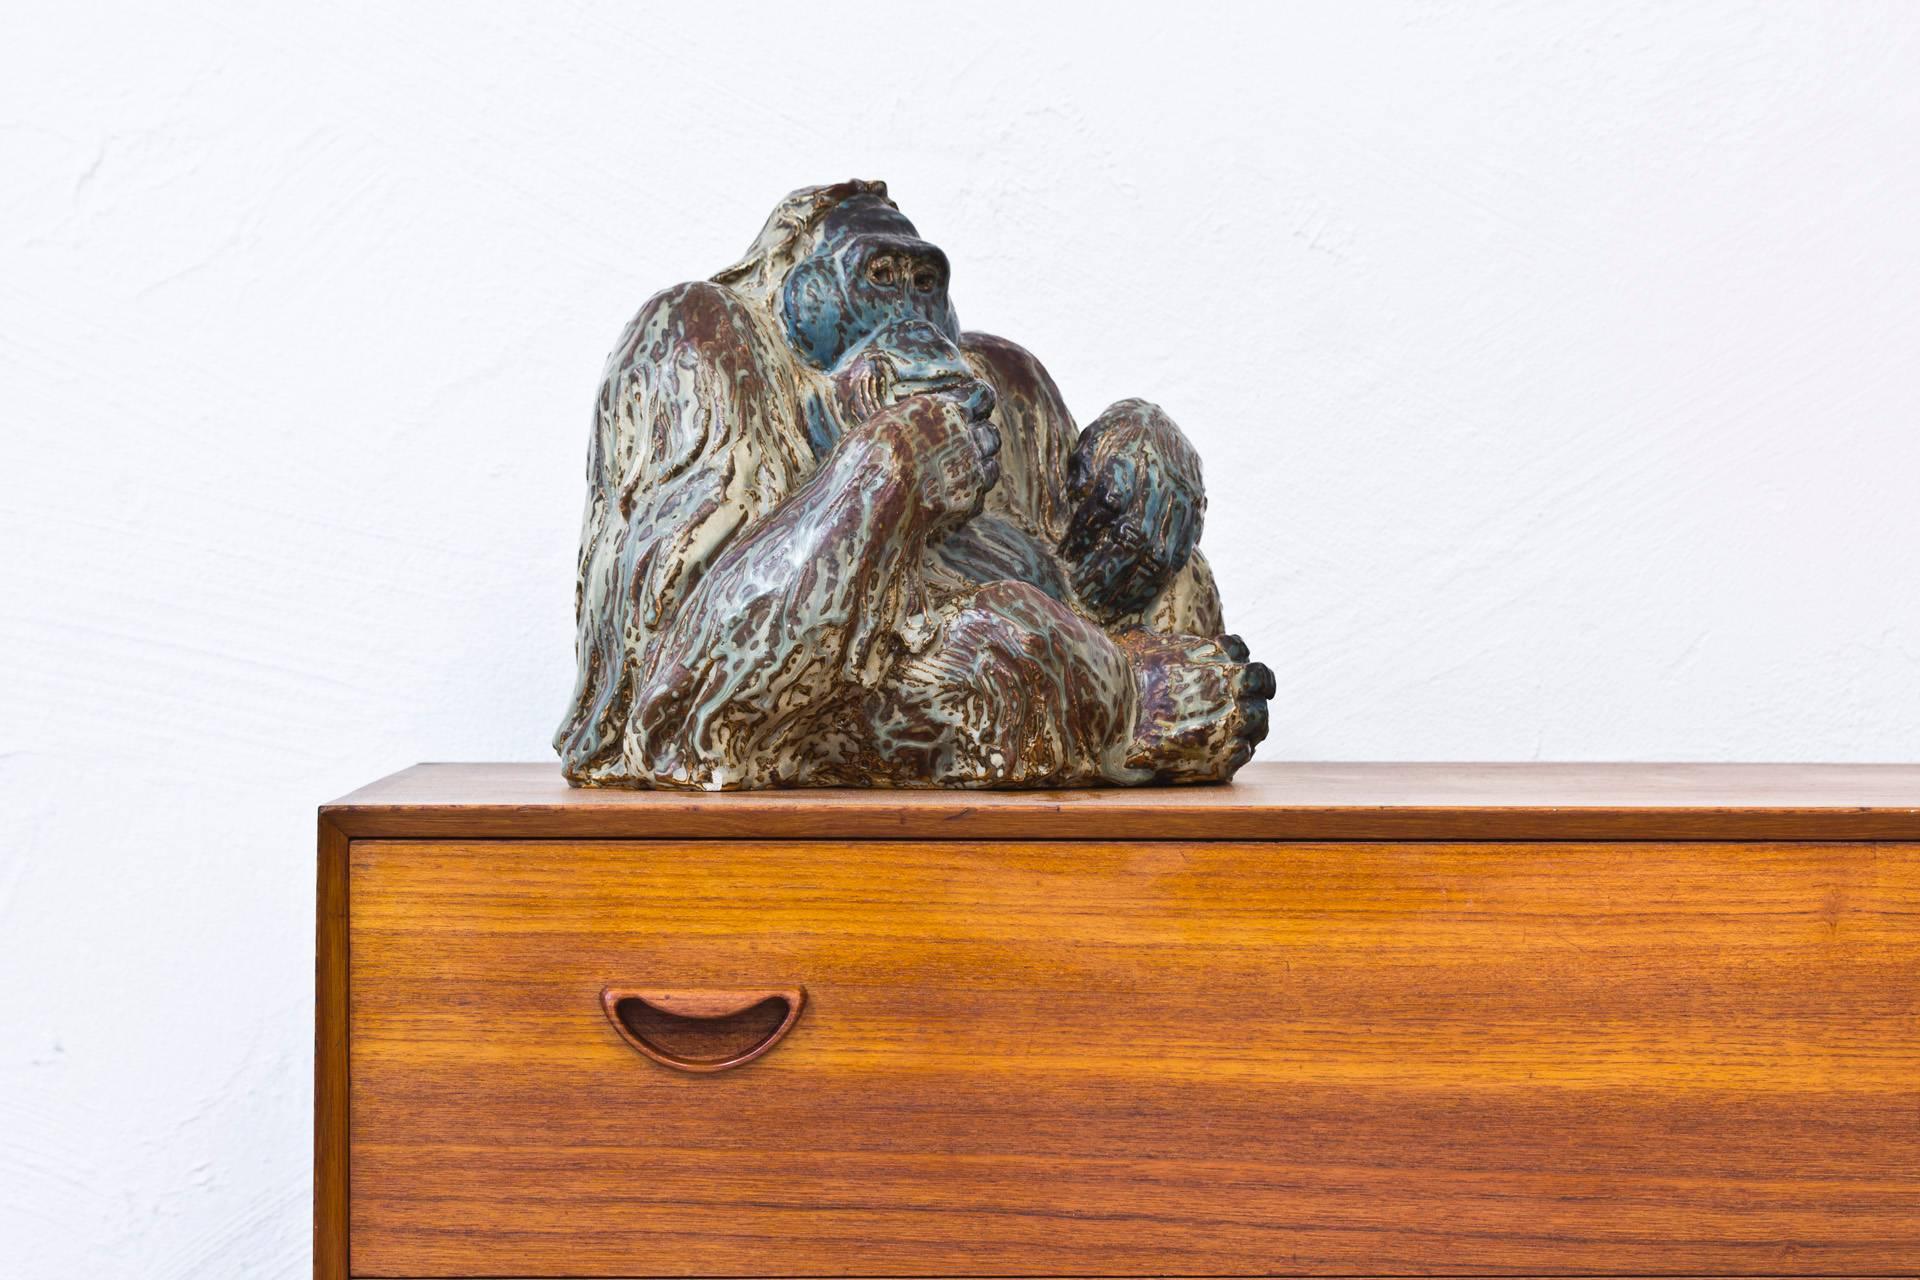 Stoneware orangutan by Danish ceramicist Knud Kyhn. Impressive size and weight handmade at 